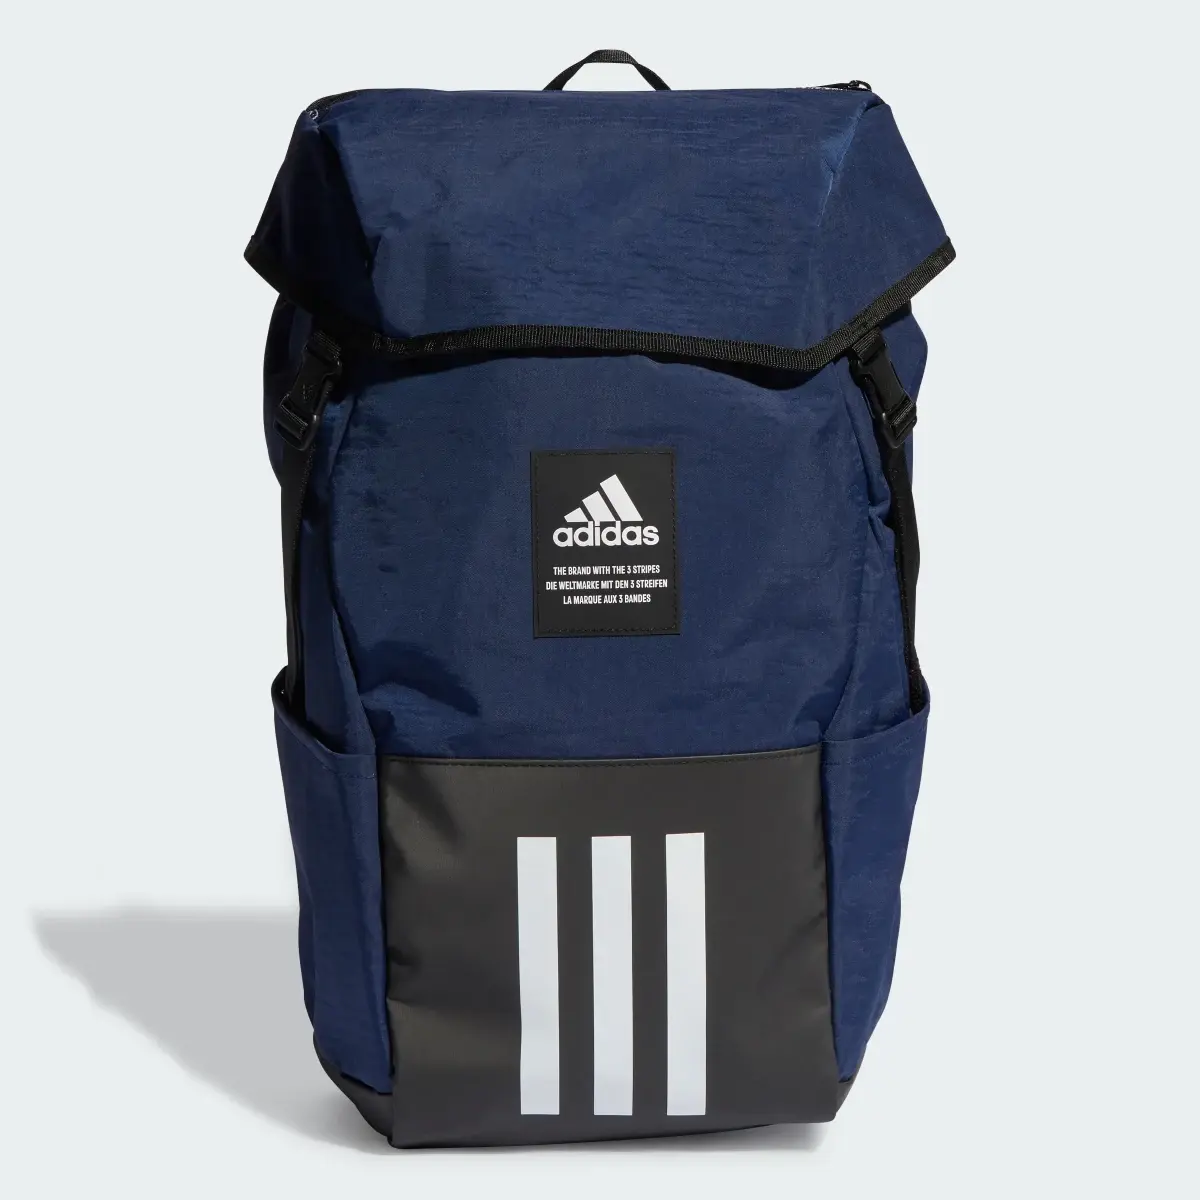 Adidas 4ATHLTS Training Backpack. 1